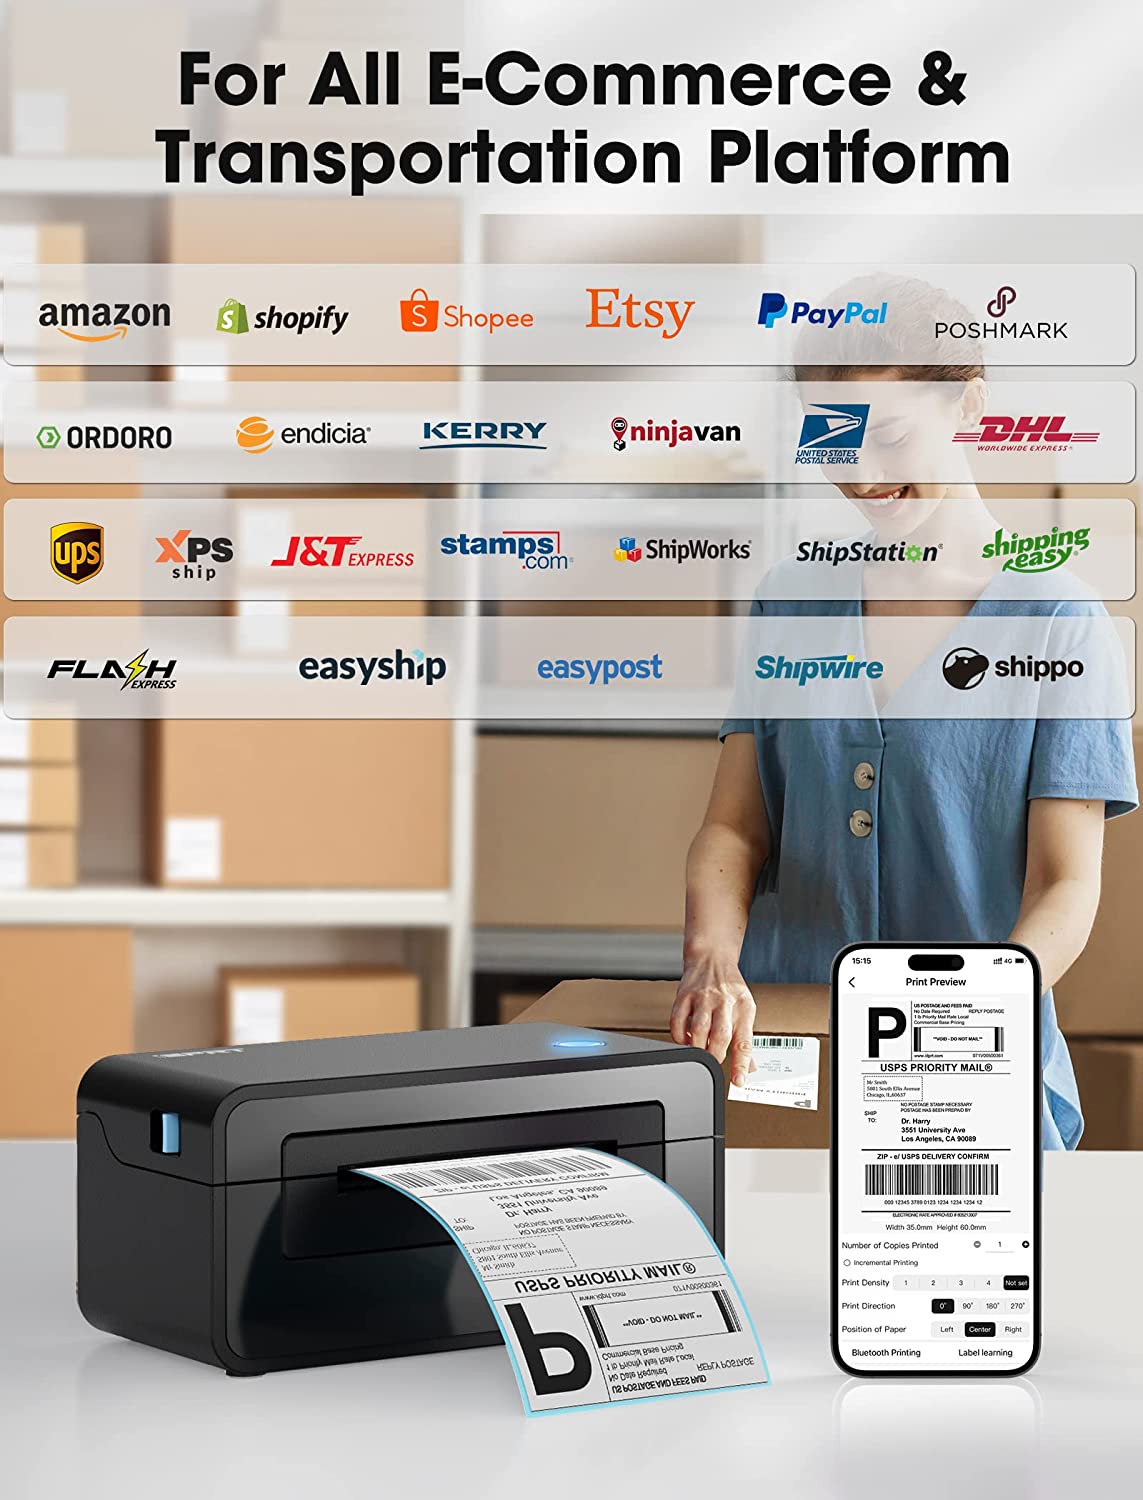 iDPRT Impresora térmica Bluetooth de etiquetas de envío para teléfono,  impresora de 4 x 6, compatible con Windows/Mac/iOS/Android, impresora  térmica